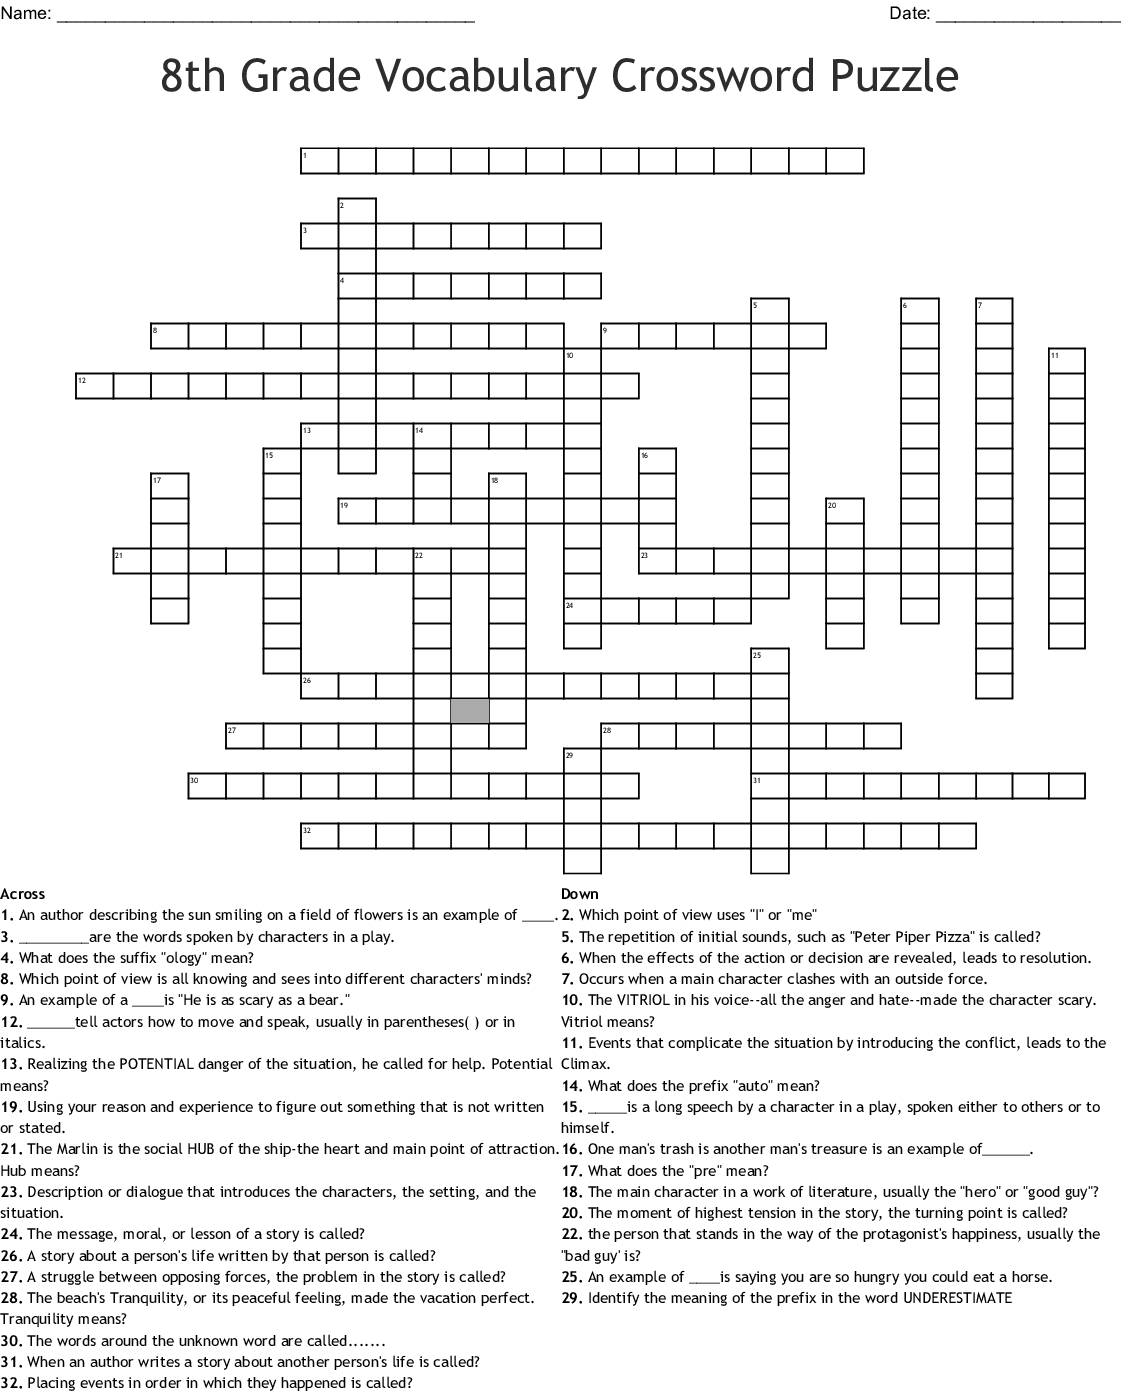 8Th Grade Vocabulary Crossword Puzzle Crossword - Wordmint - Free Printable Crossword Puzzle #1 Answers